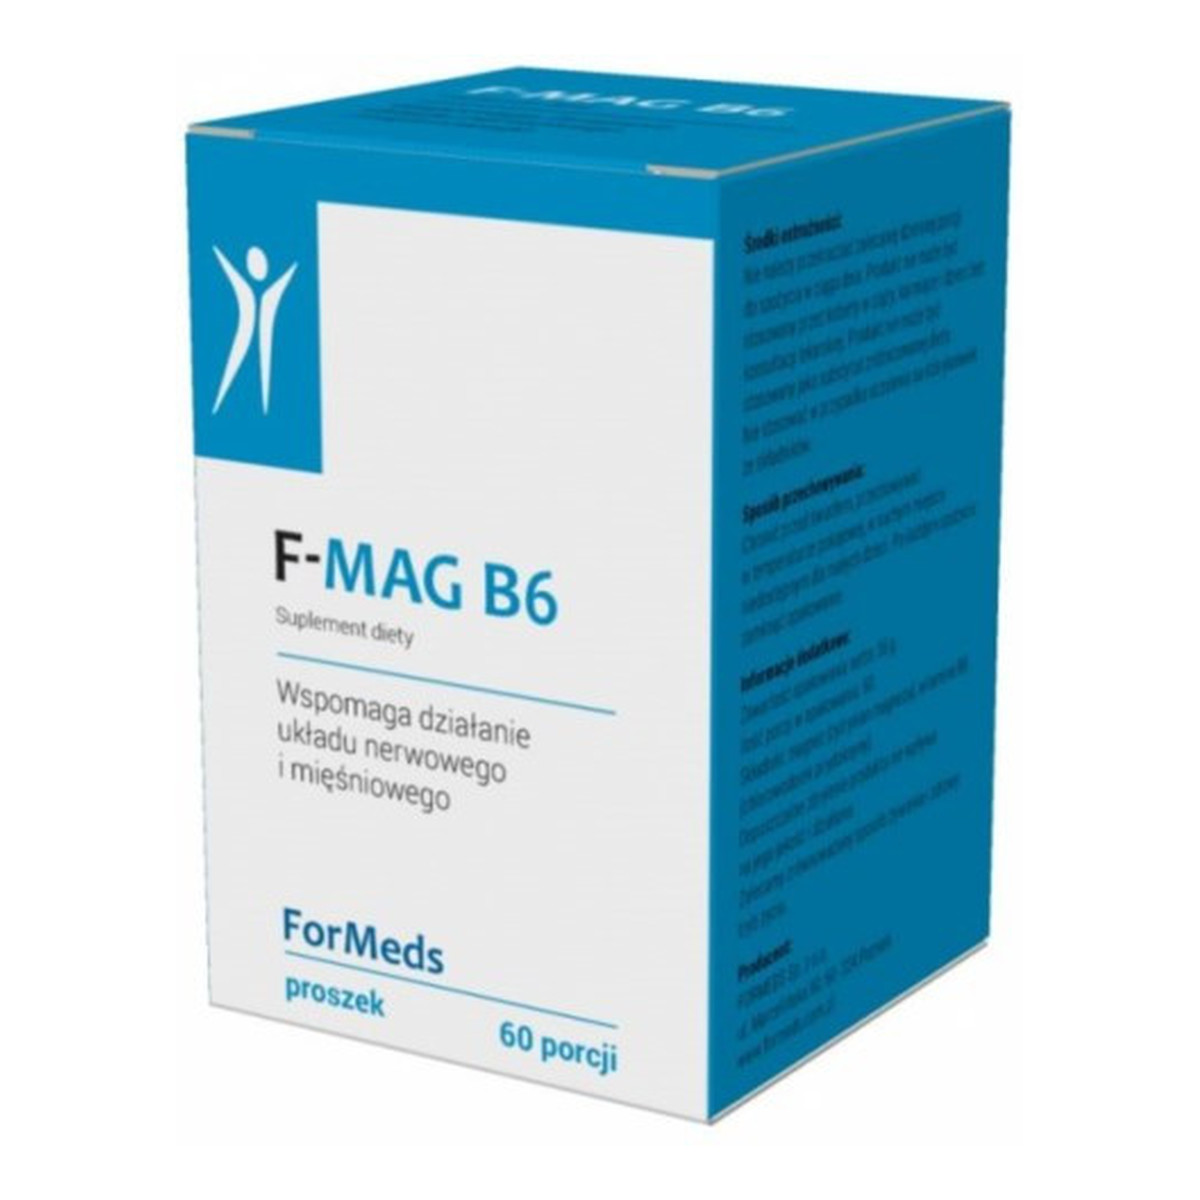 Formeds F-mag b6 suplement diety w proszku 51g